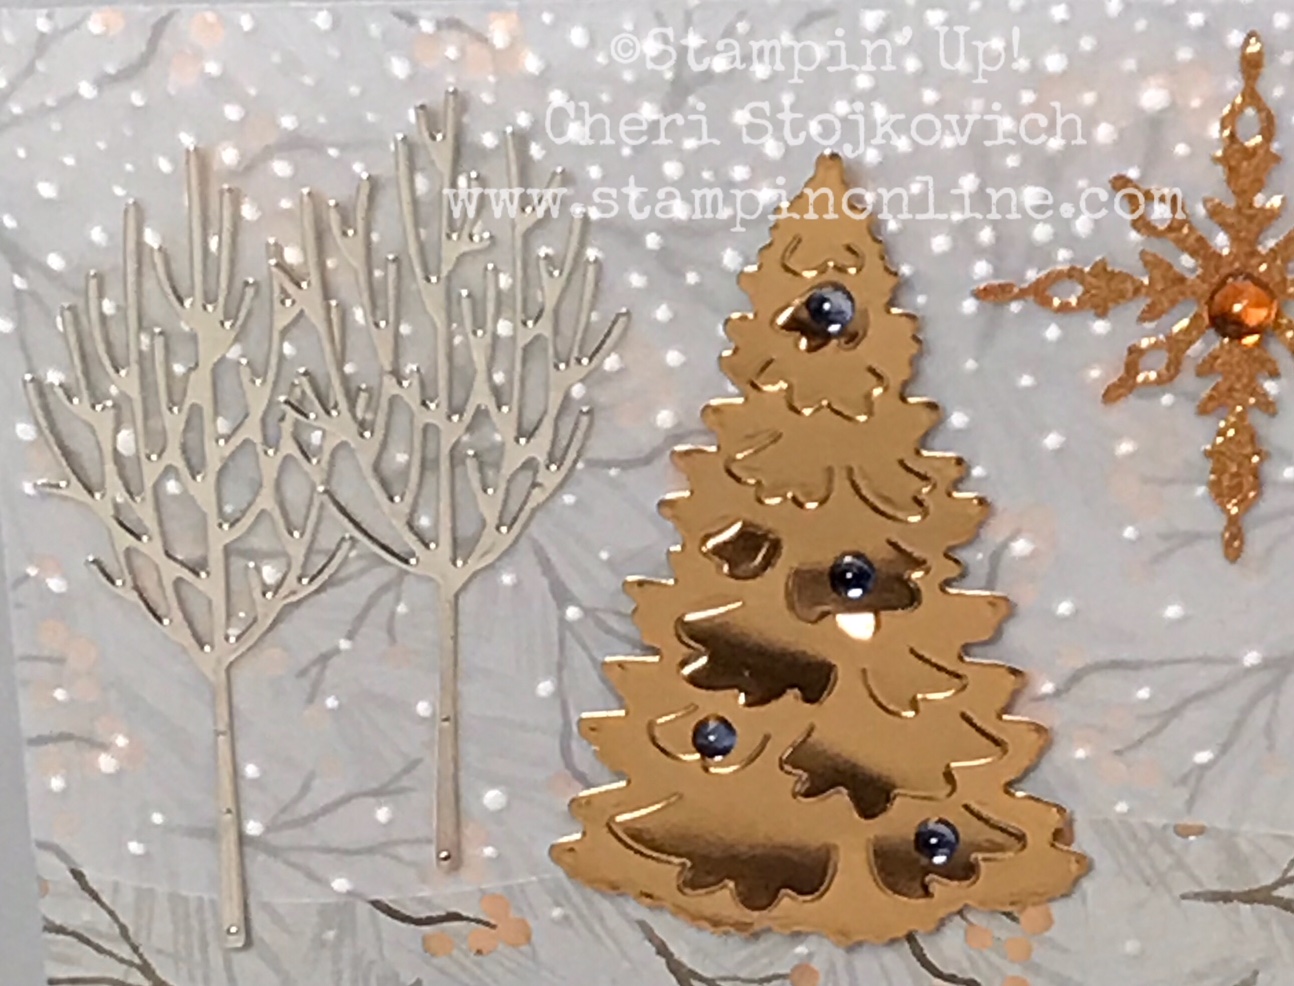 Easy Handmade DIY Christmas Card Ideas - Wonder Forest